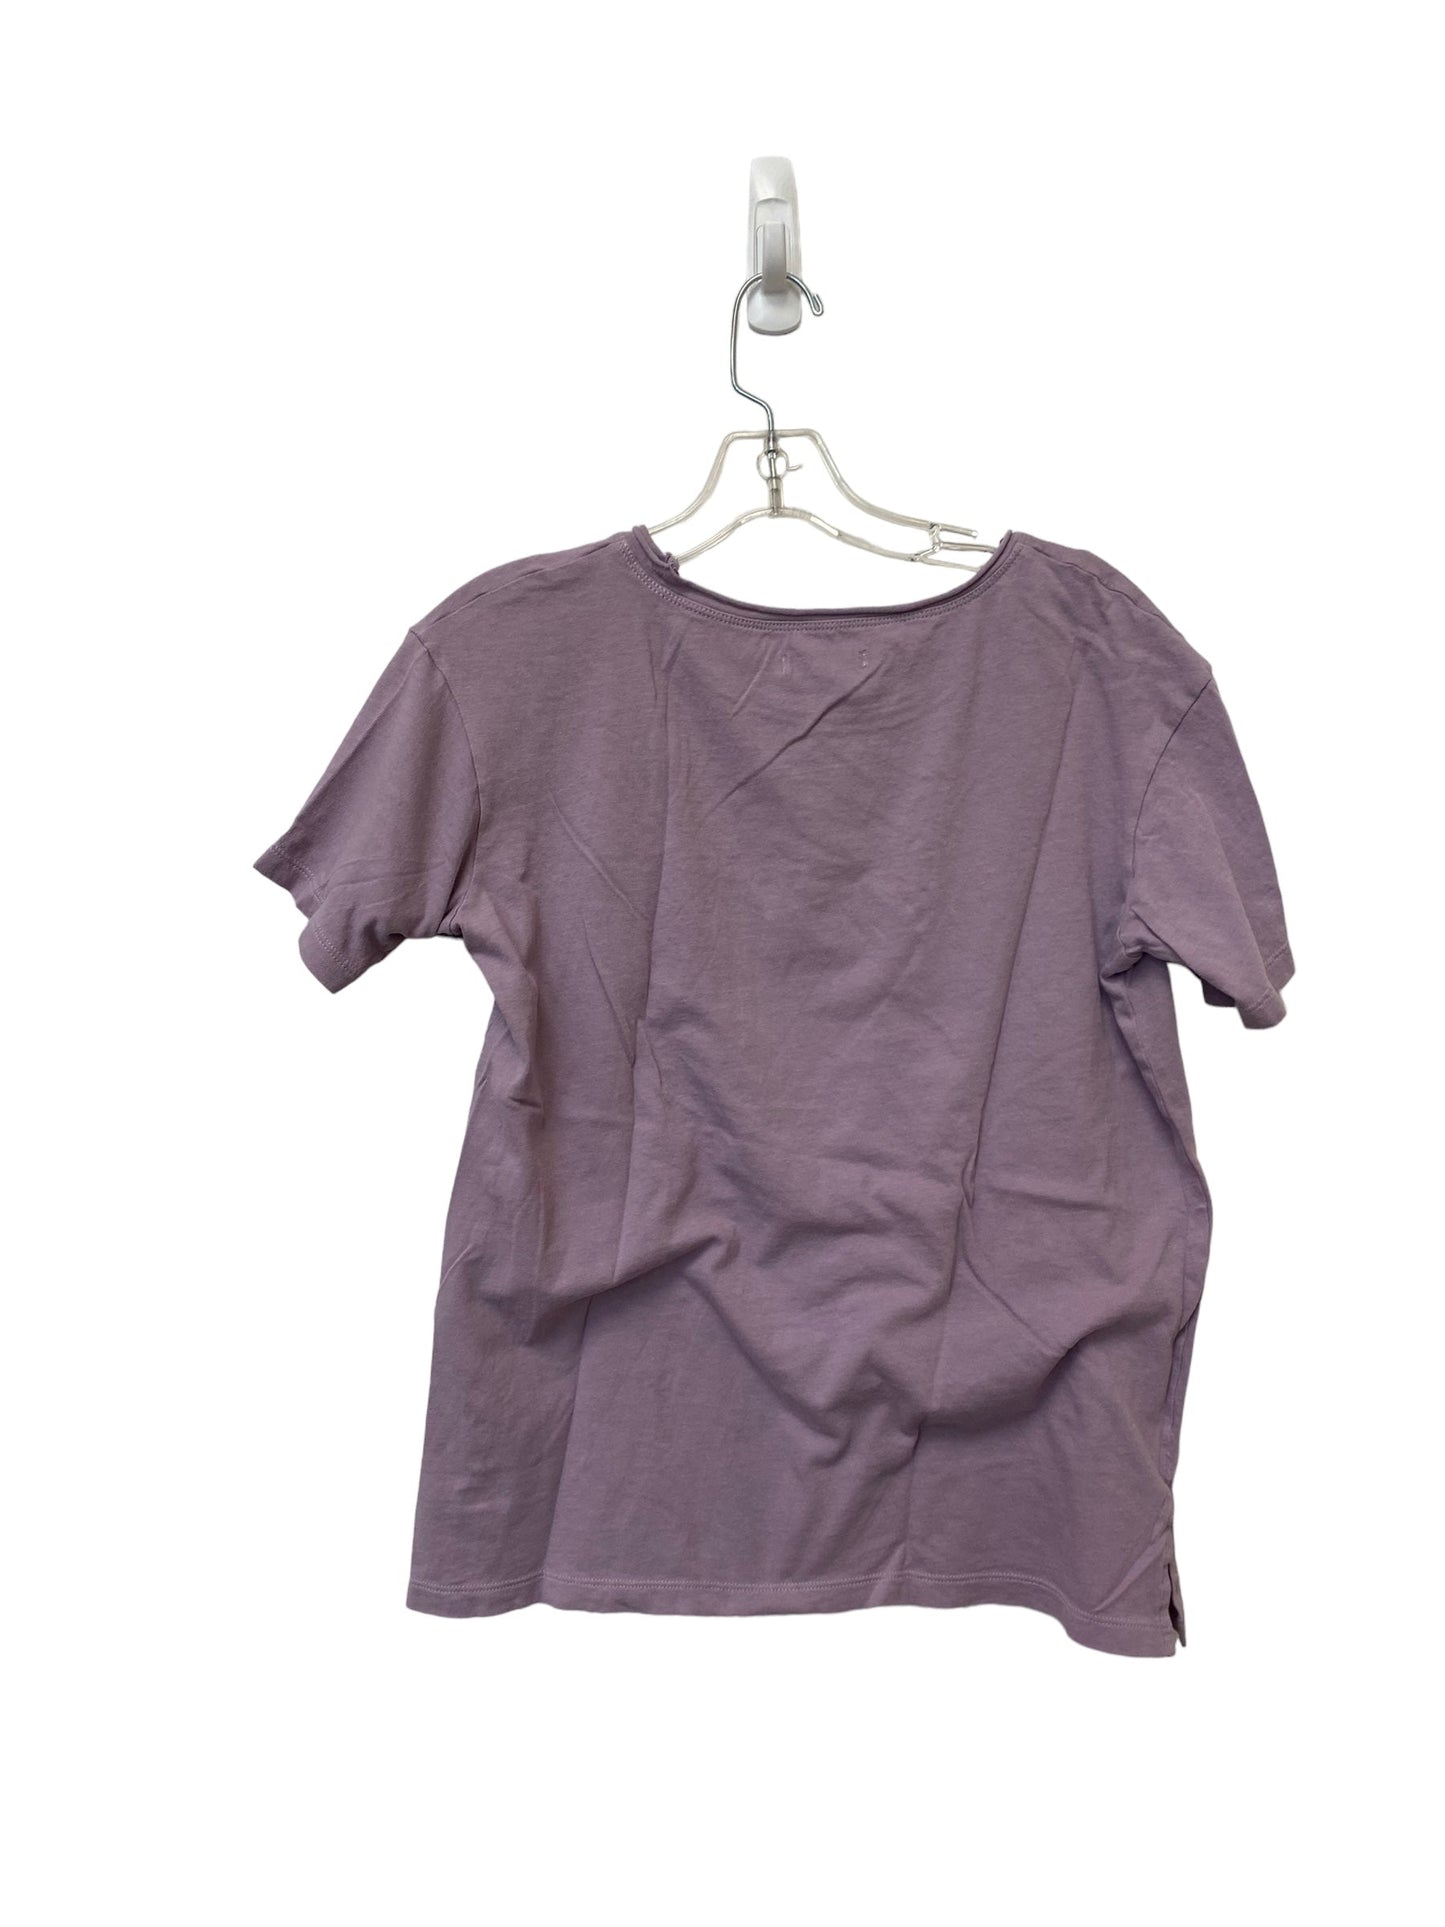 Purple Top Short Sleeve Madewell, Size Xxs